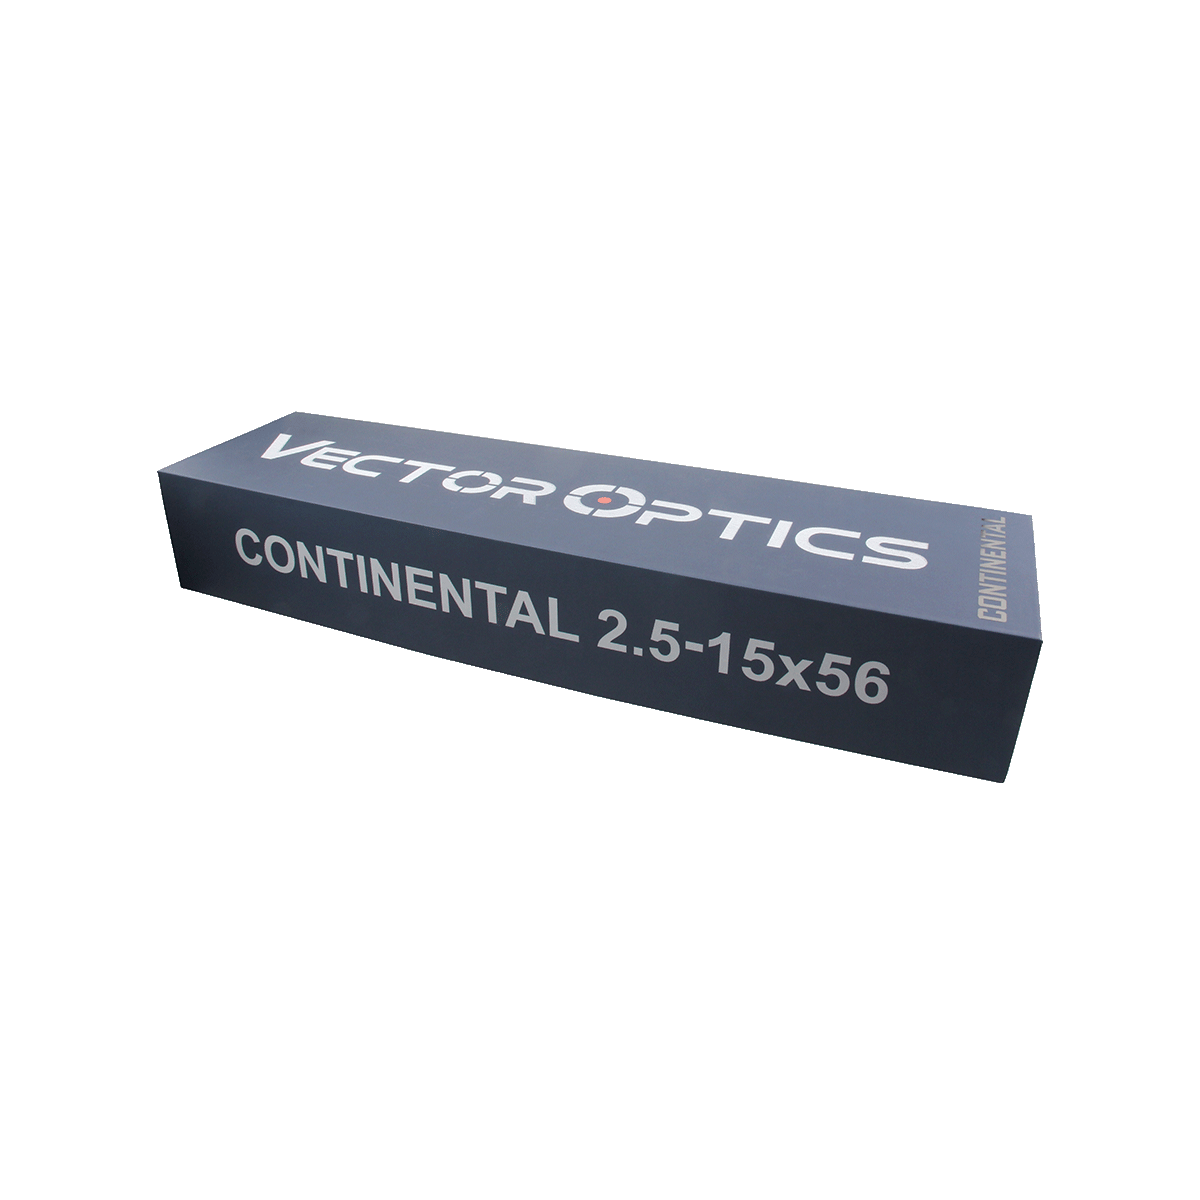 Continental x6 2.5-15x56 Riflescope BDC